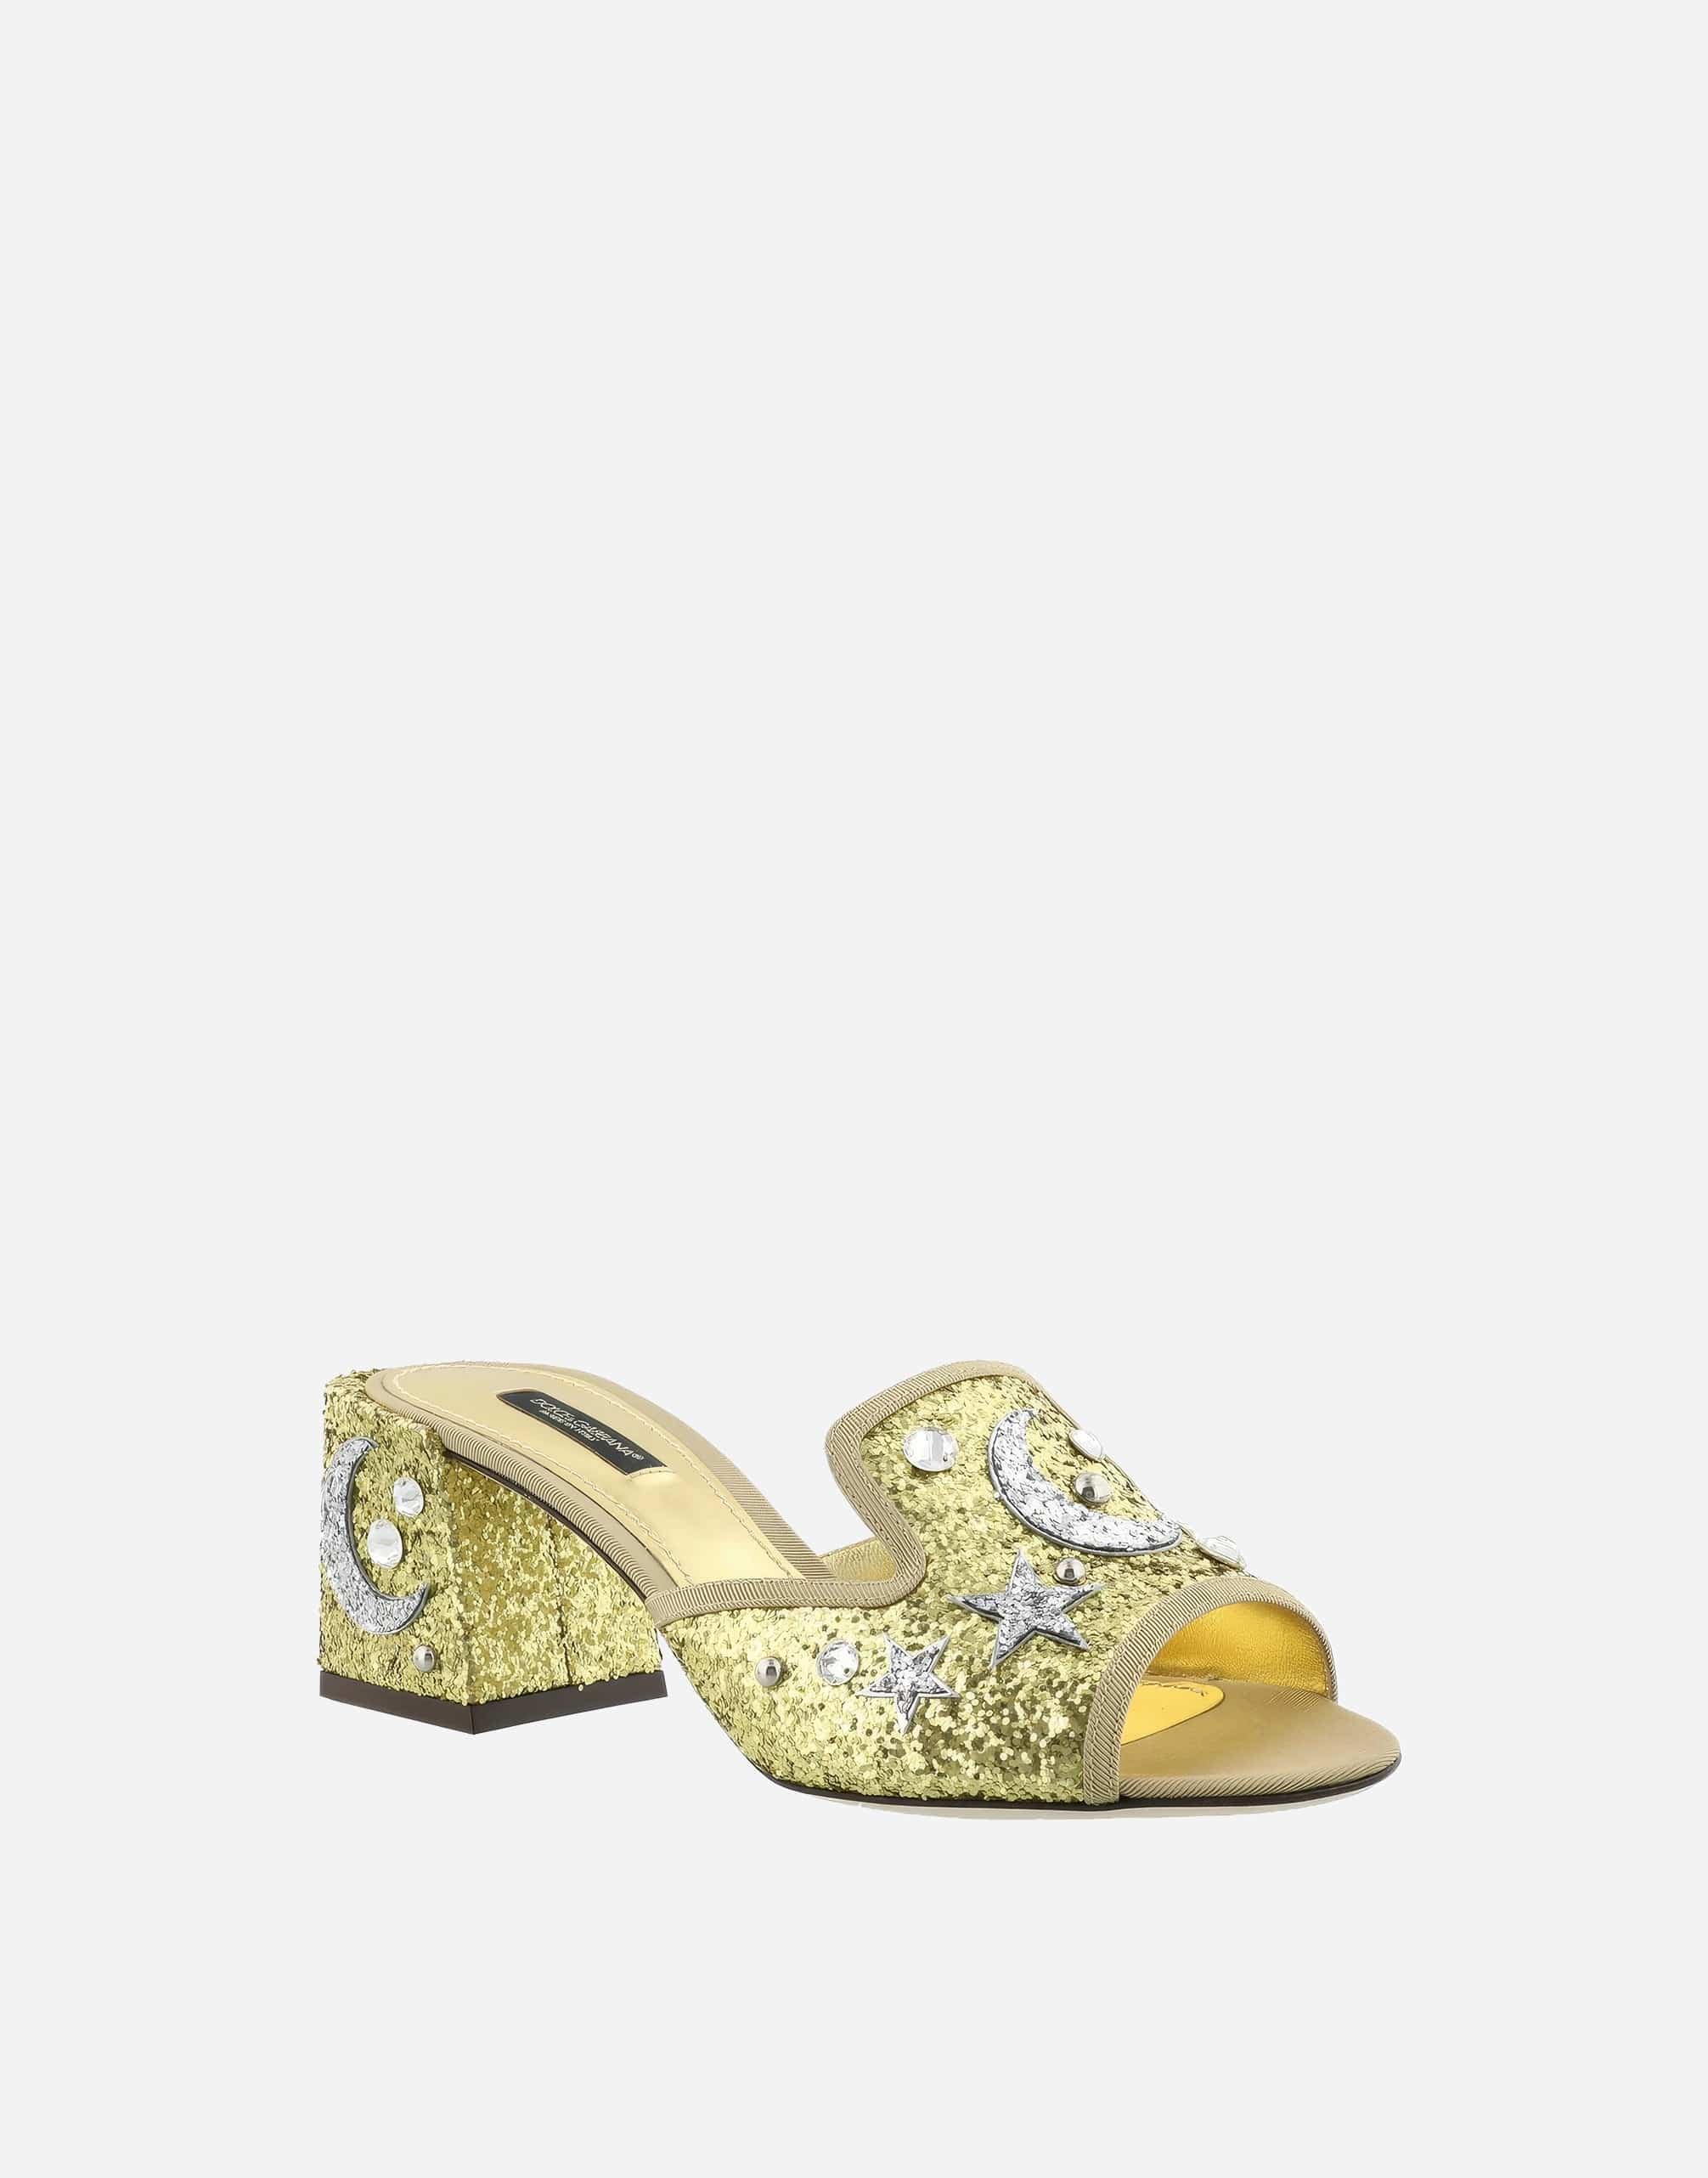 Dolce & Gabbana Jewel Gold-Tone Open Toe Sandals